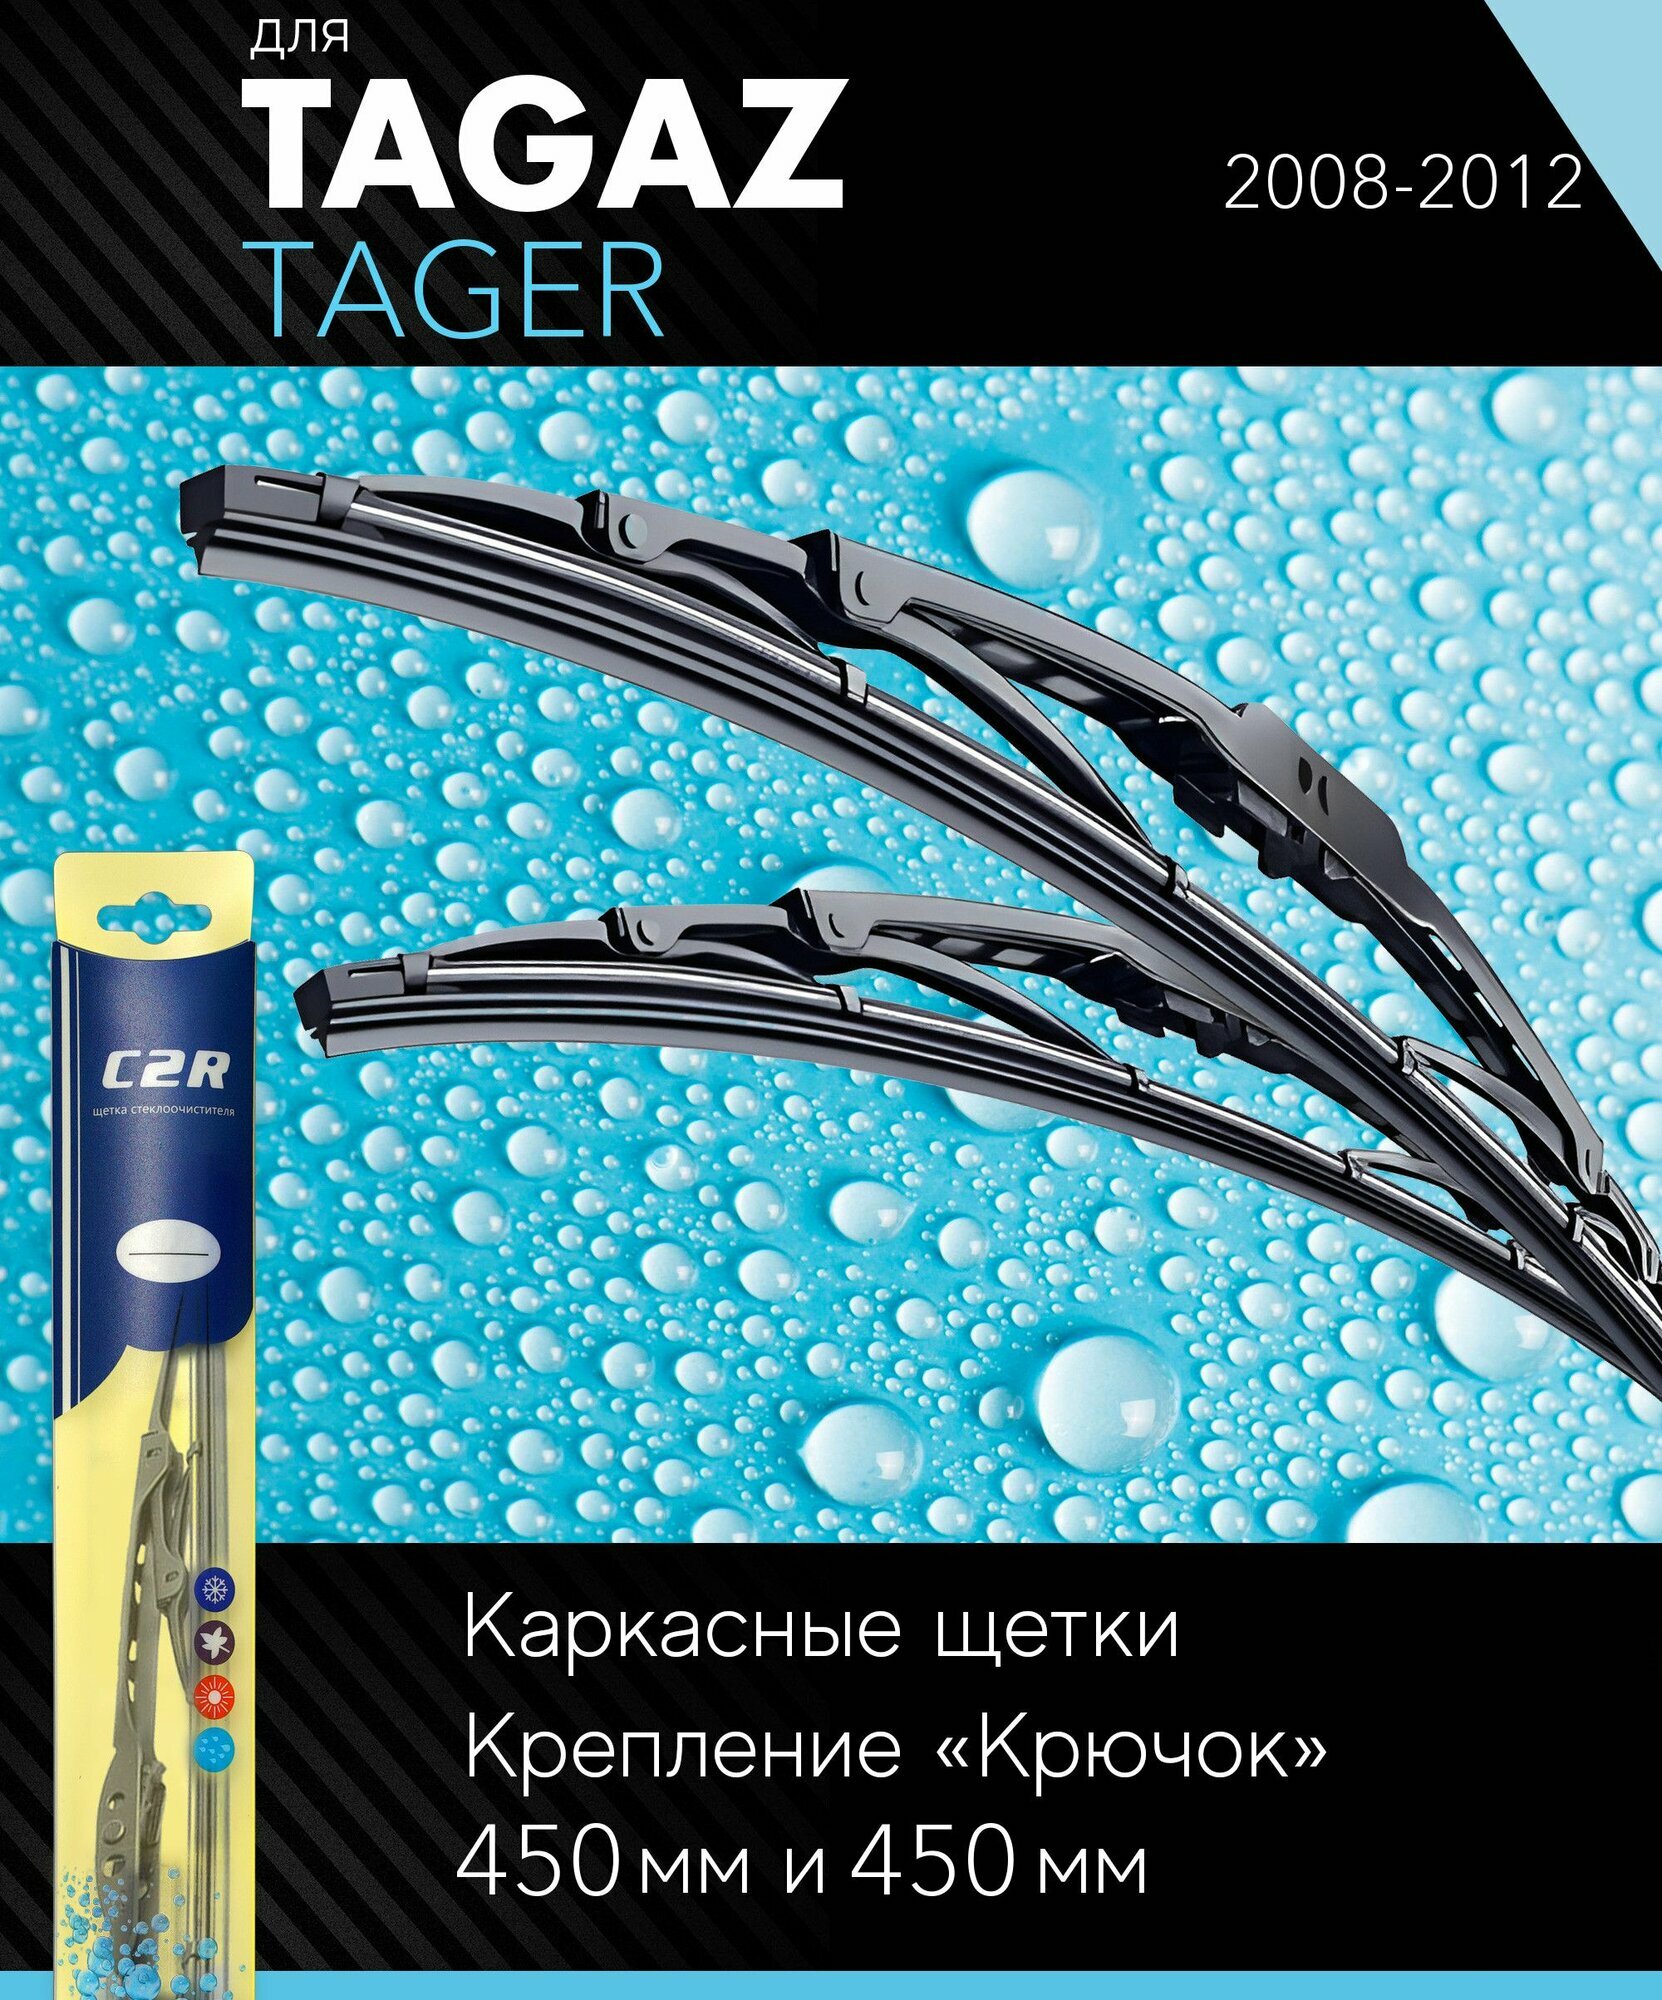 2 щетки стеклоочистителя 450 450 мм на Тагаз Тагер 2008-2012, каркасные дворники комплект для Tagaz Tager - C2R